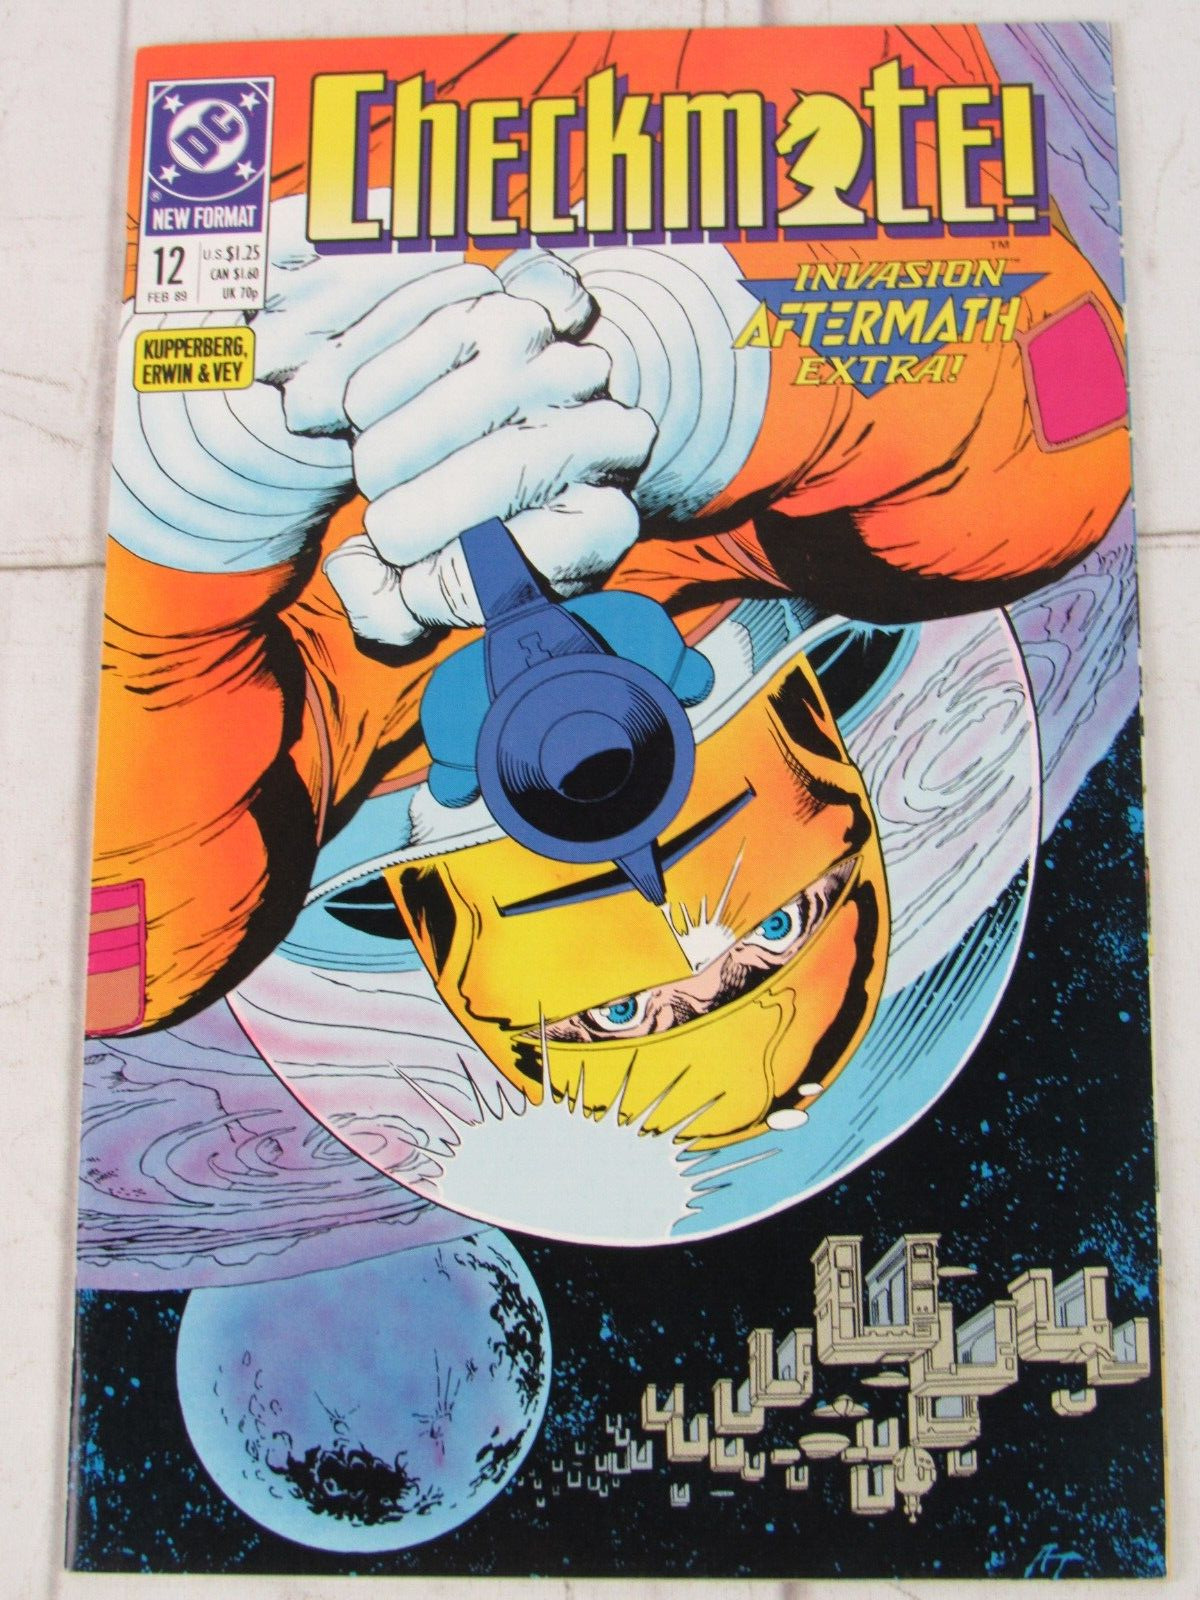 Checkmate #12 Feb. 1989 DC Comics